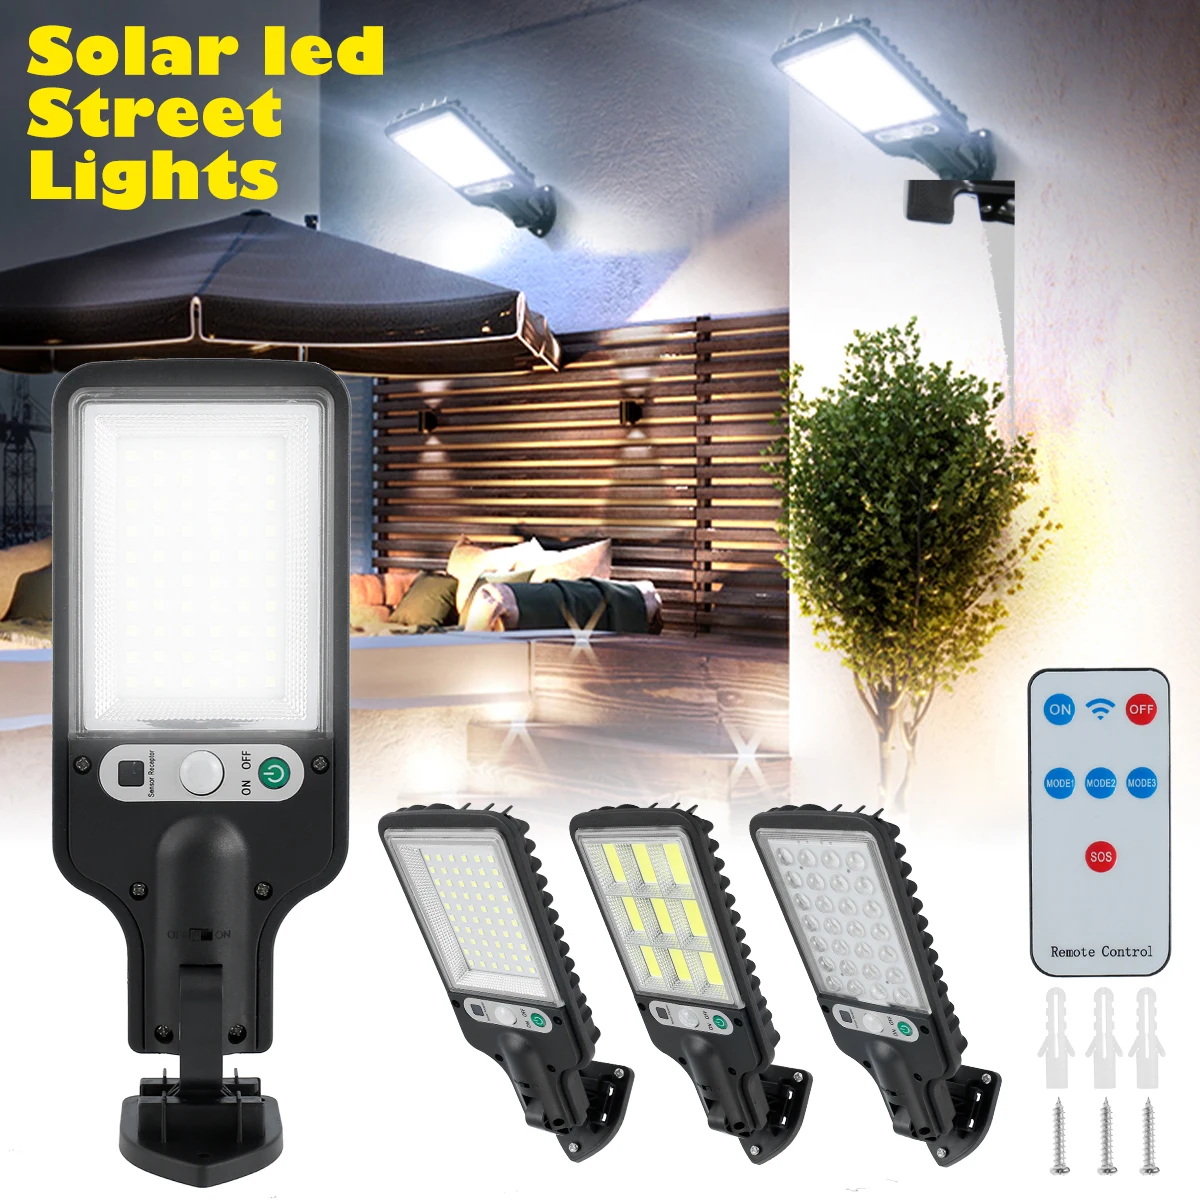 

New LED Solar Street Light 2.5W Solar Wall Light w/1200mAh Battery IP65 Waterproof Motion Sensor Light 3 Lighting Modes Parking